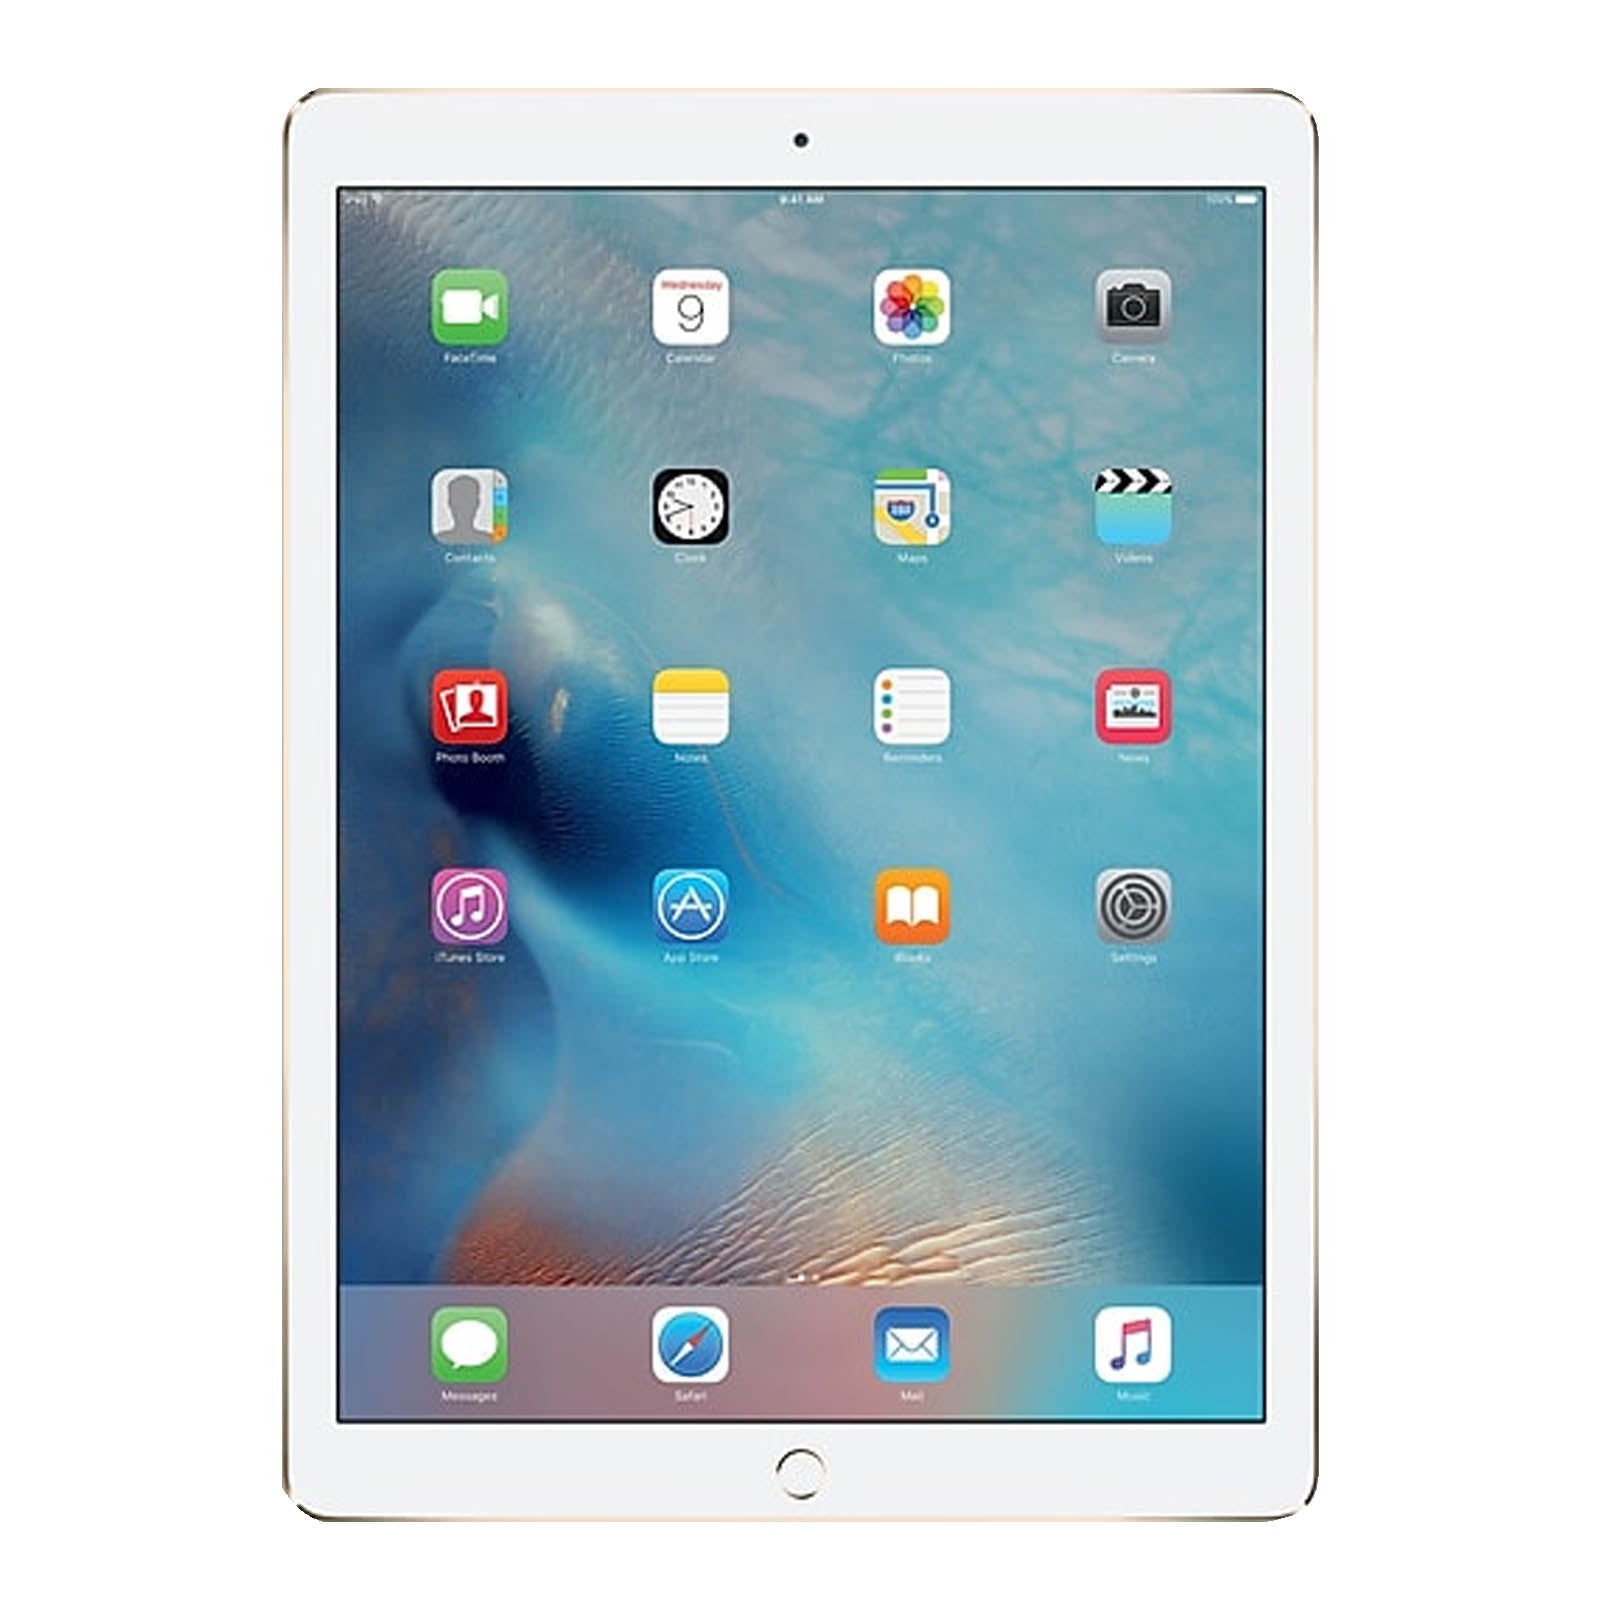 iPad Pro 12.9 Inch 2nd Gen 64GB Gold Good - Unlocked